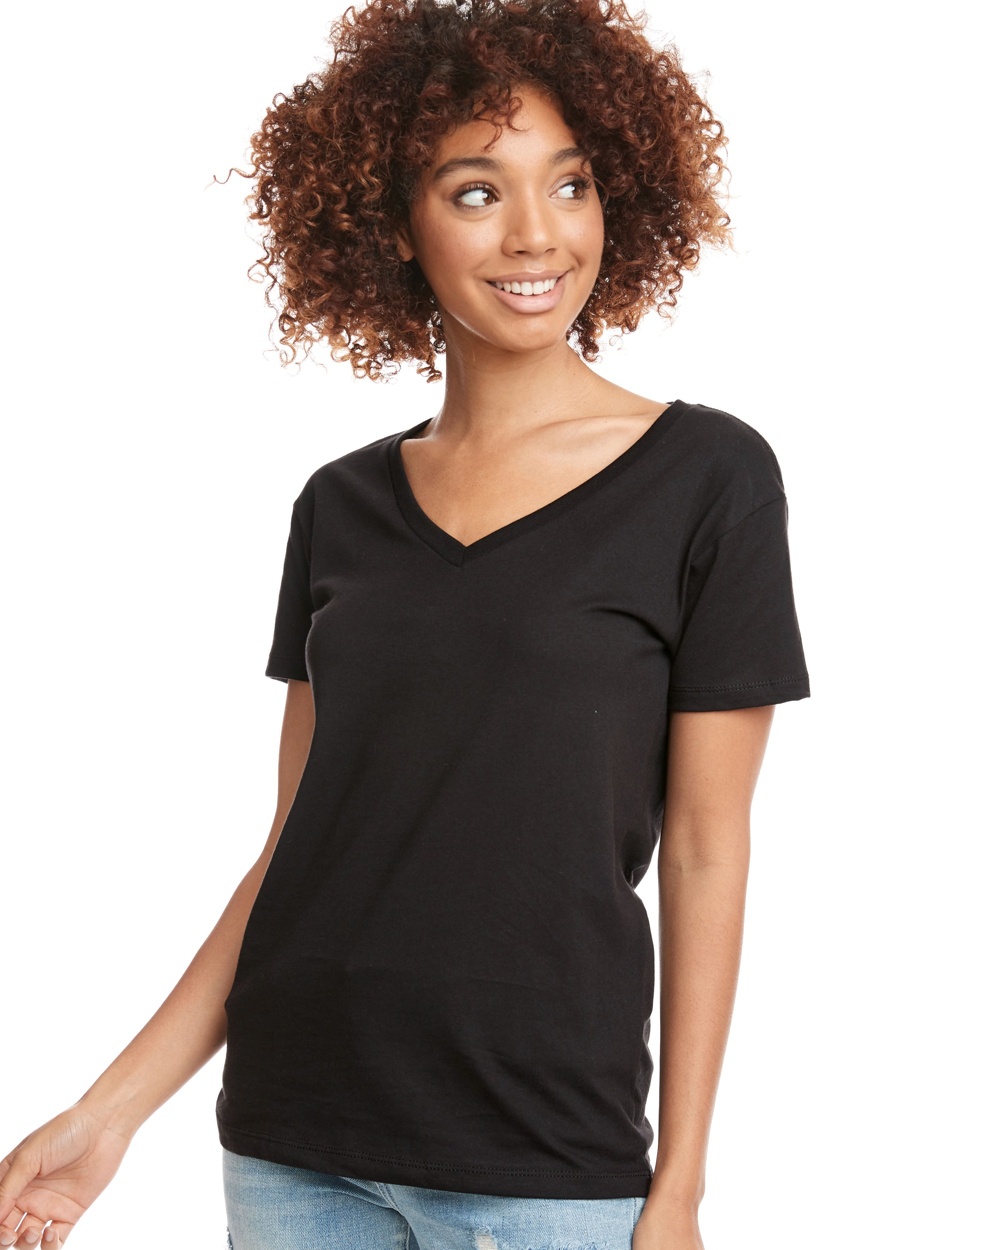 NL046 - Women's Cotton V-Neck T-Shirt - One Stop